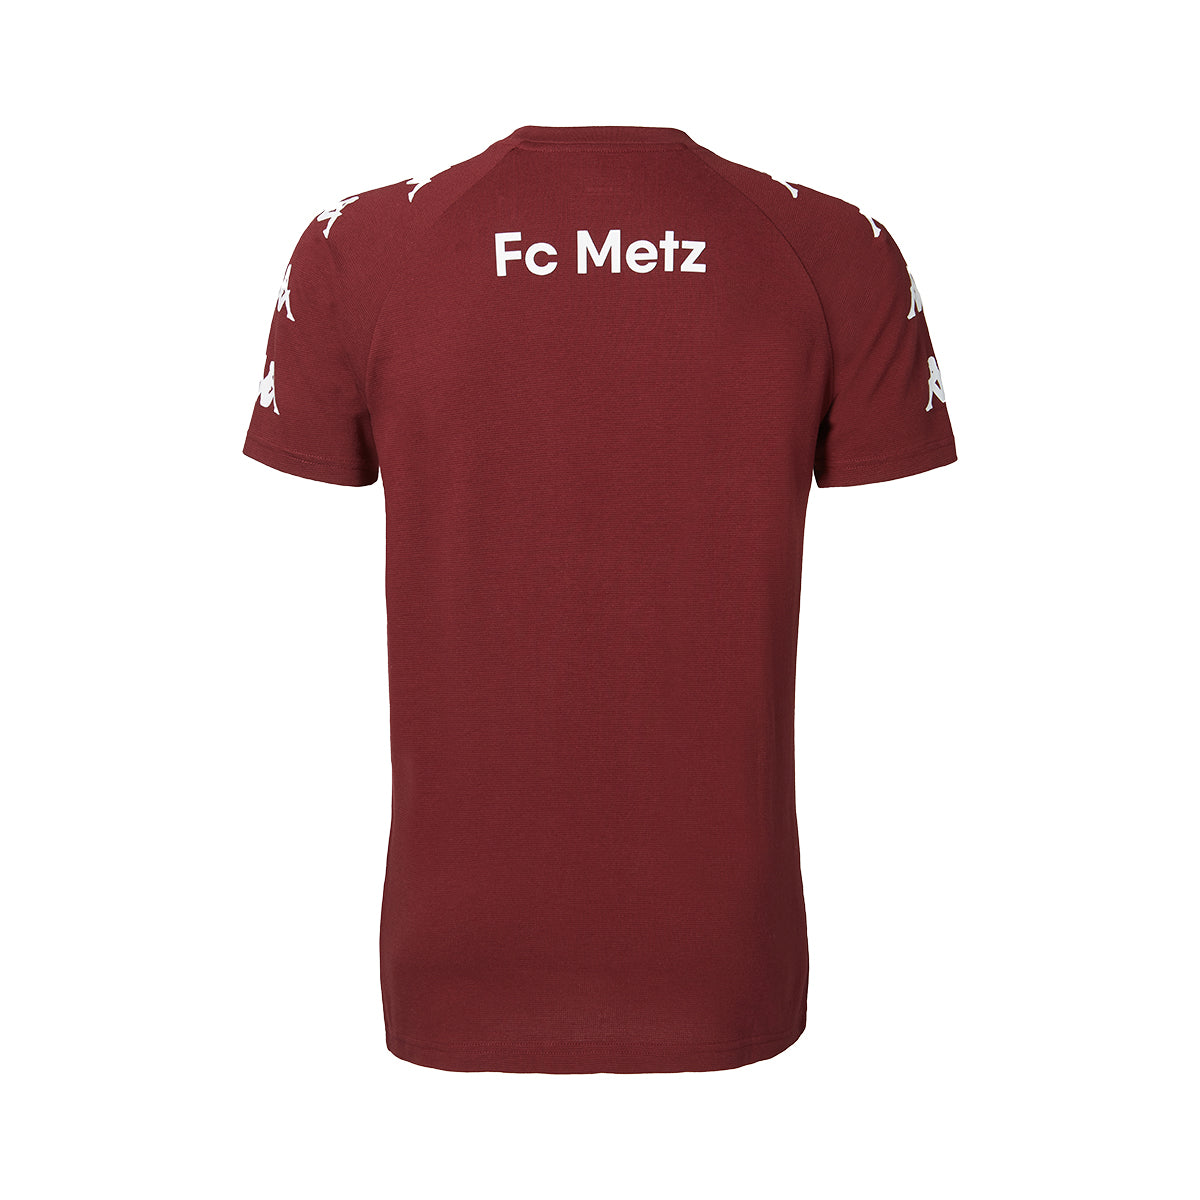 T-shirt Ancone FC Metz Marron homme - image 2